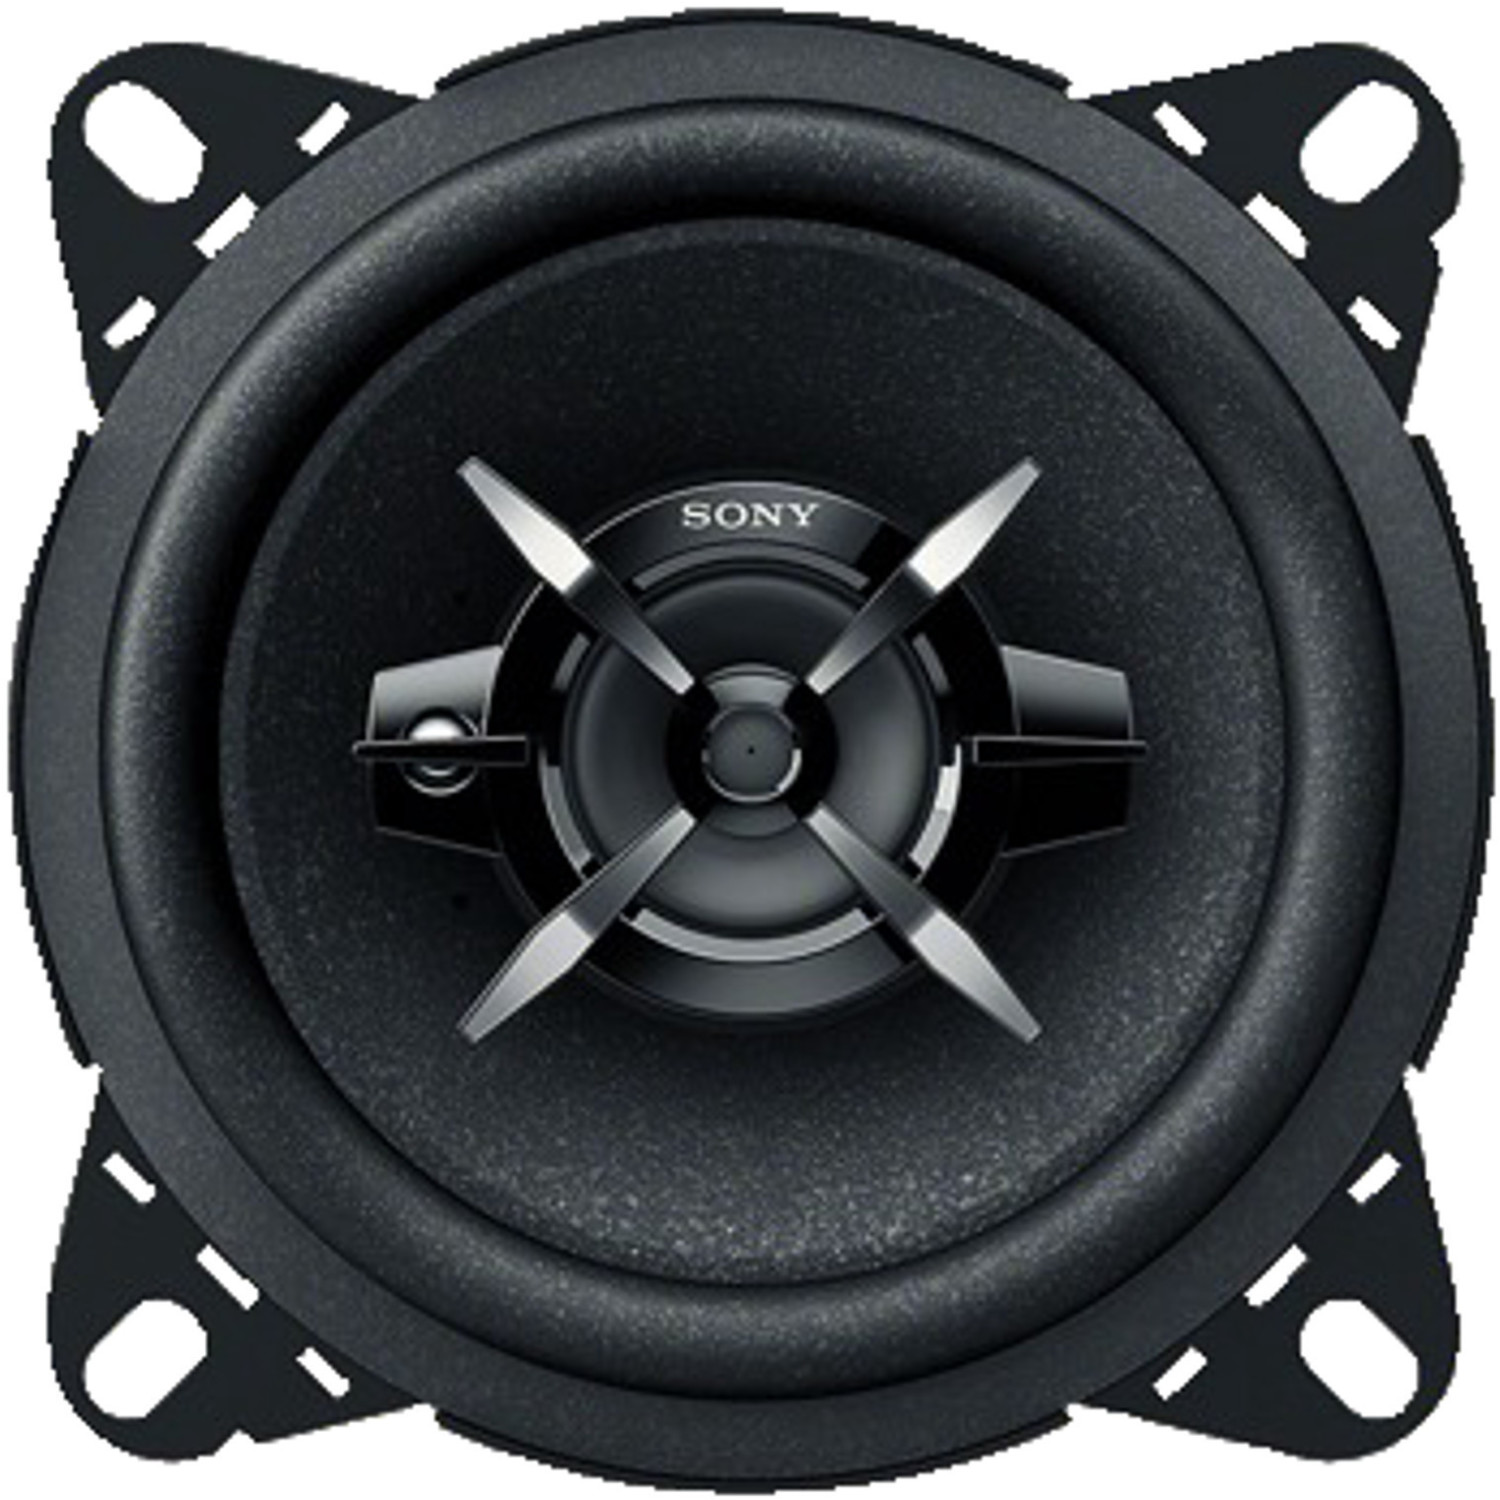 Sony XSFB1330 13 cm 3-Wege Auto-Lautspecher mit 240 Watt